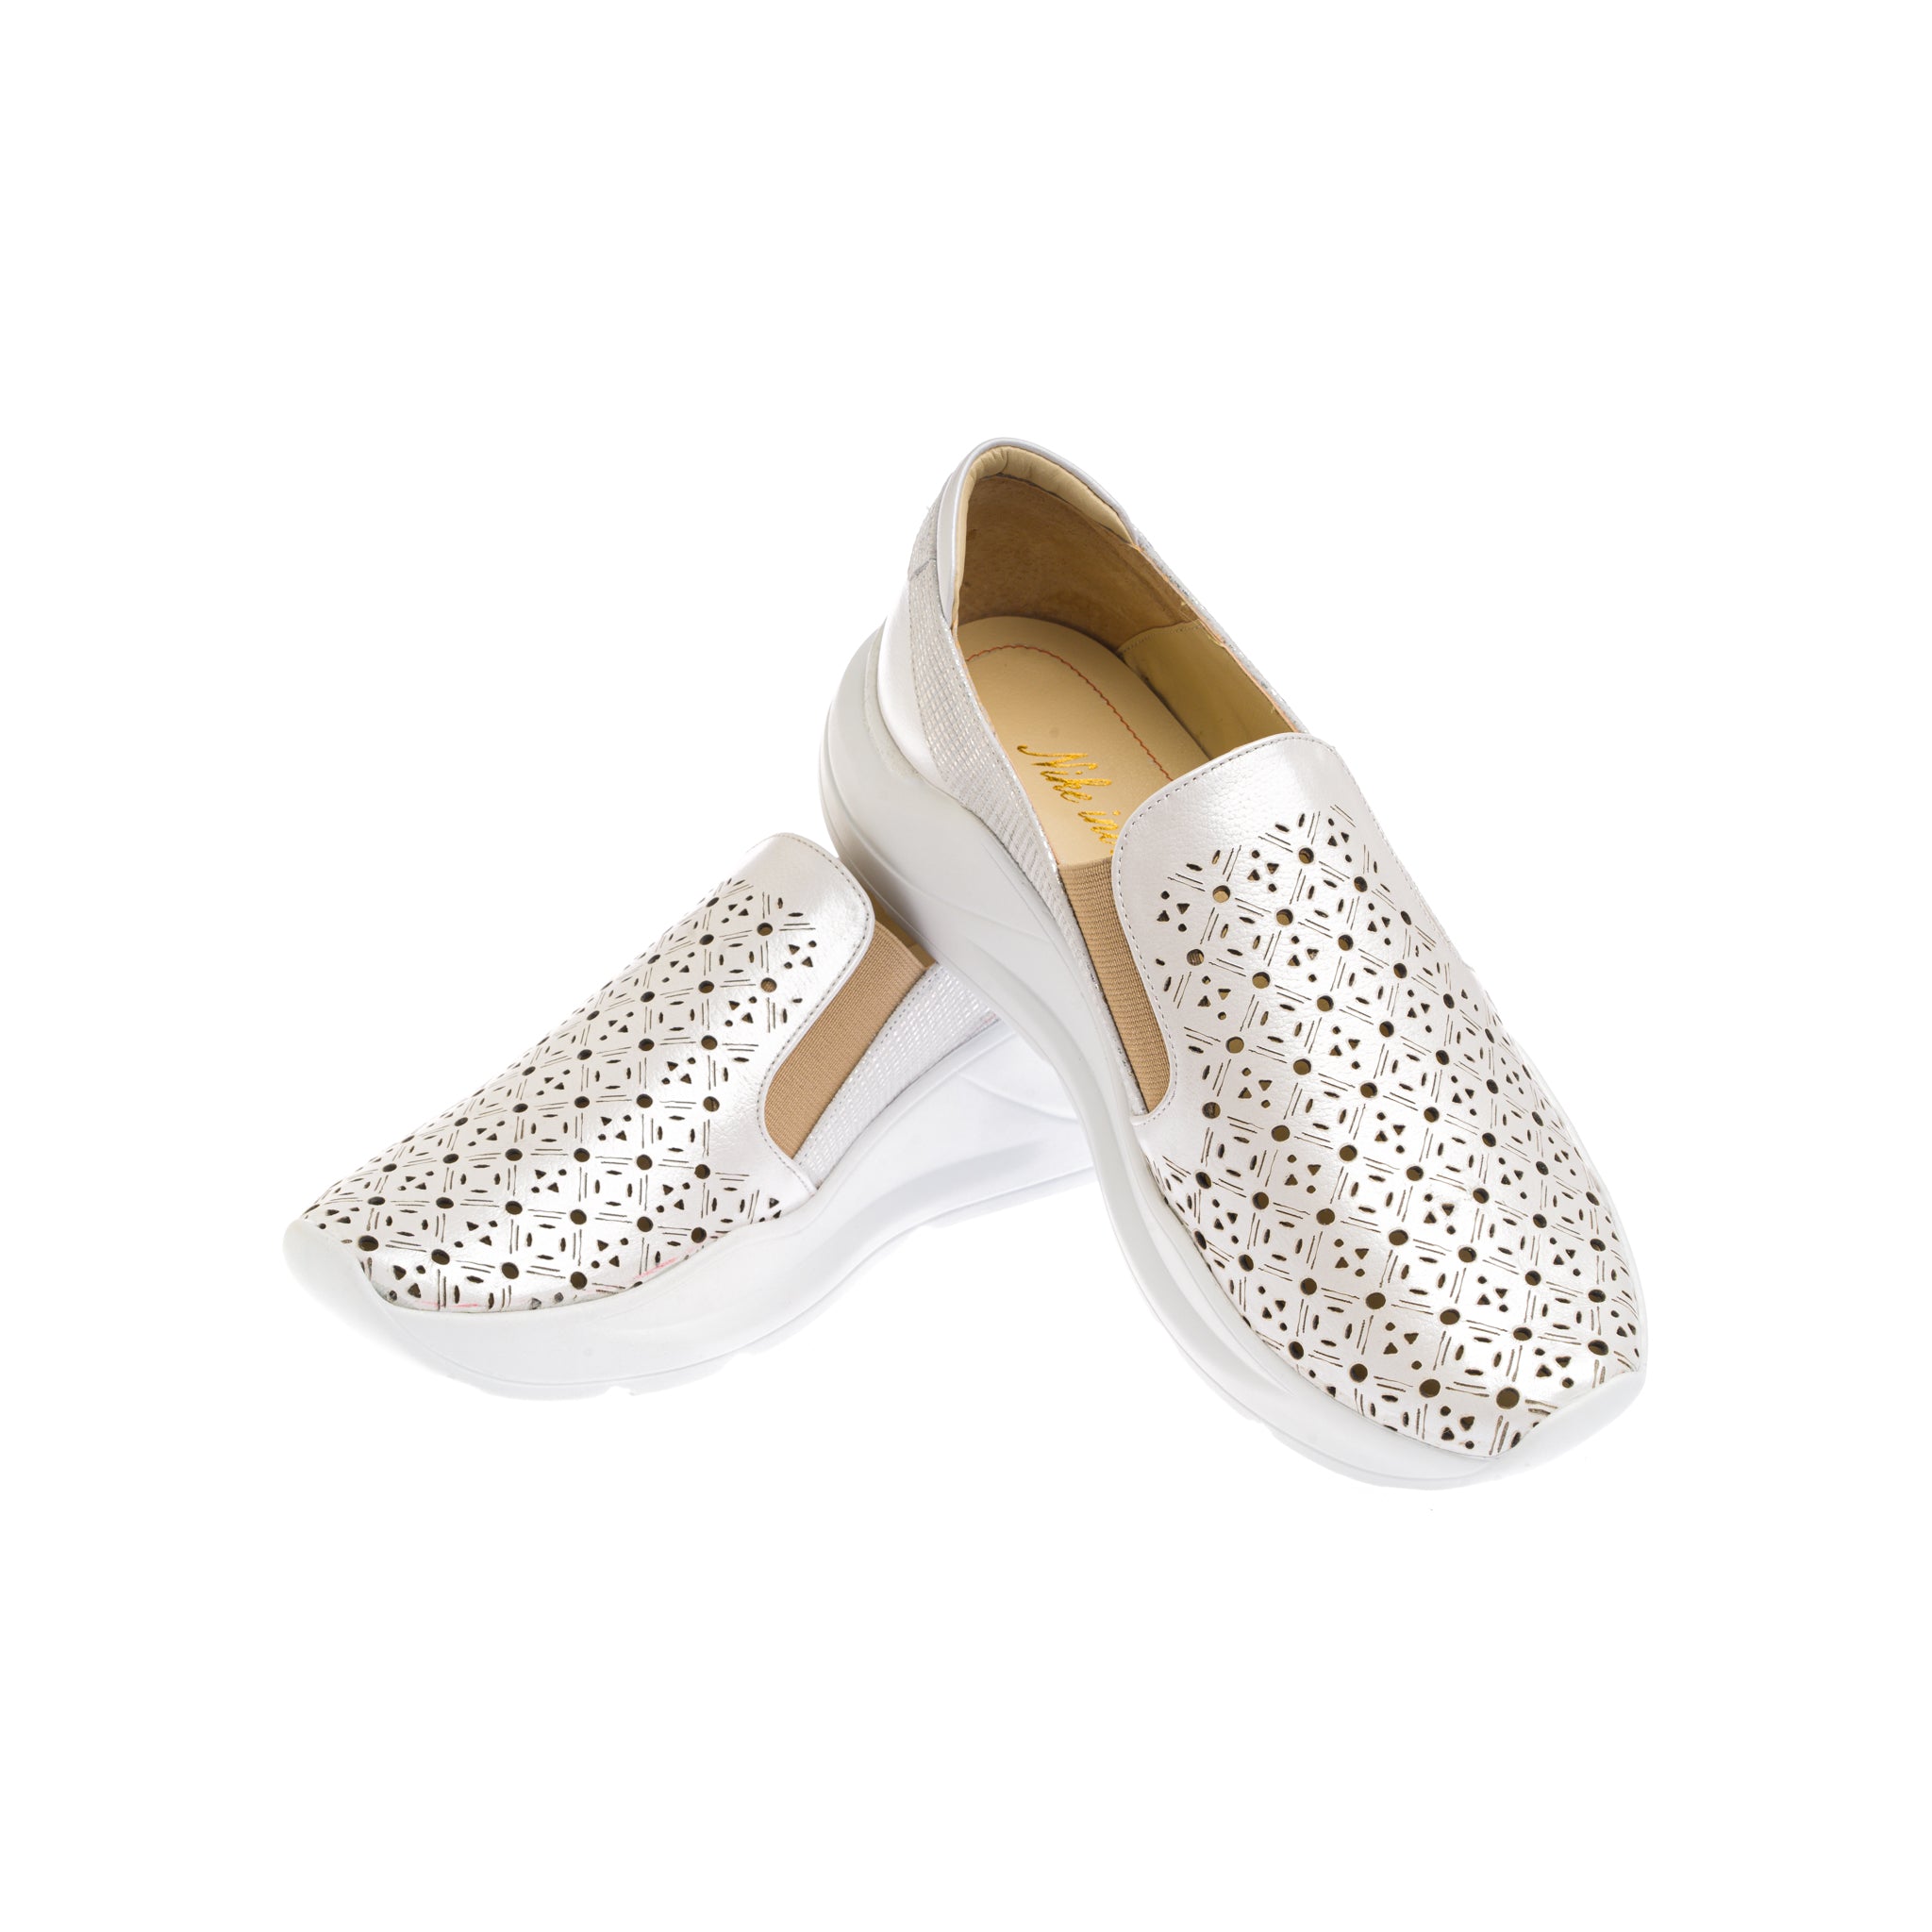 Pantofi Casual Dama din Piele Naturala,Selene,albi